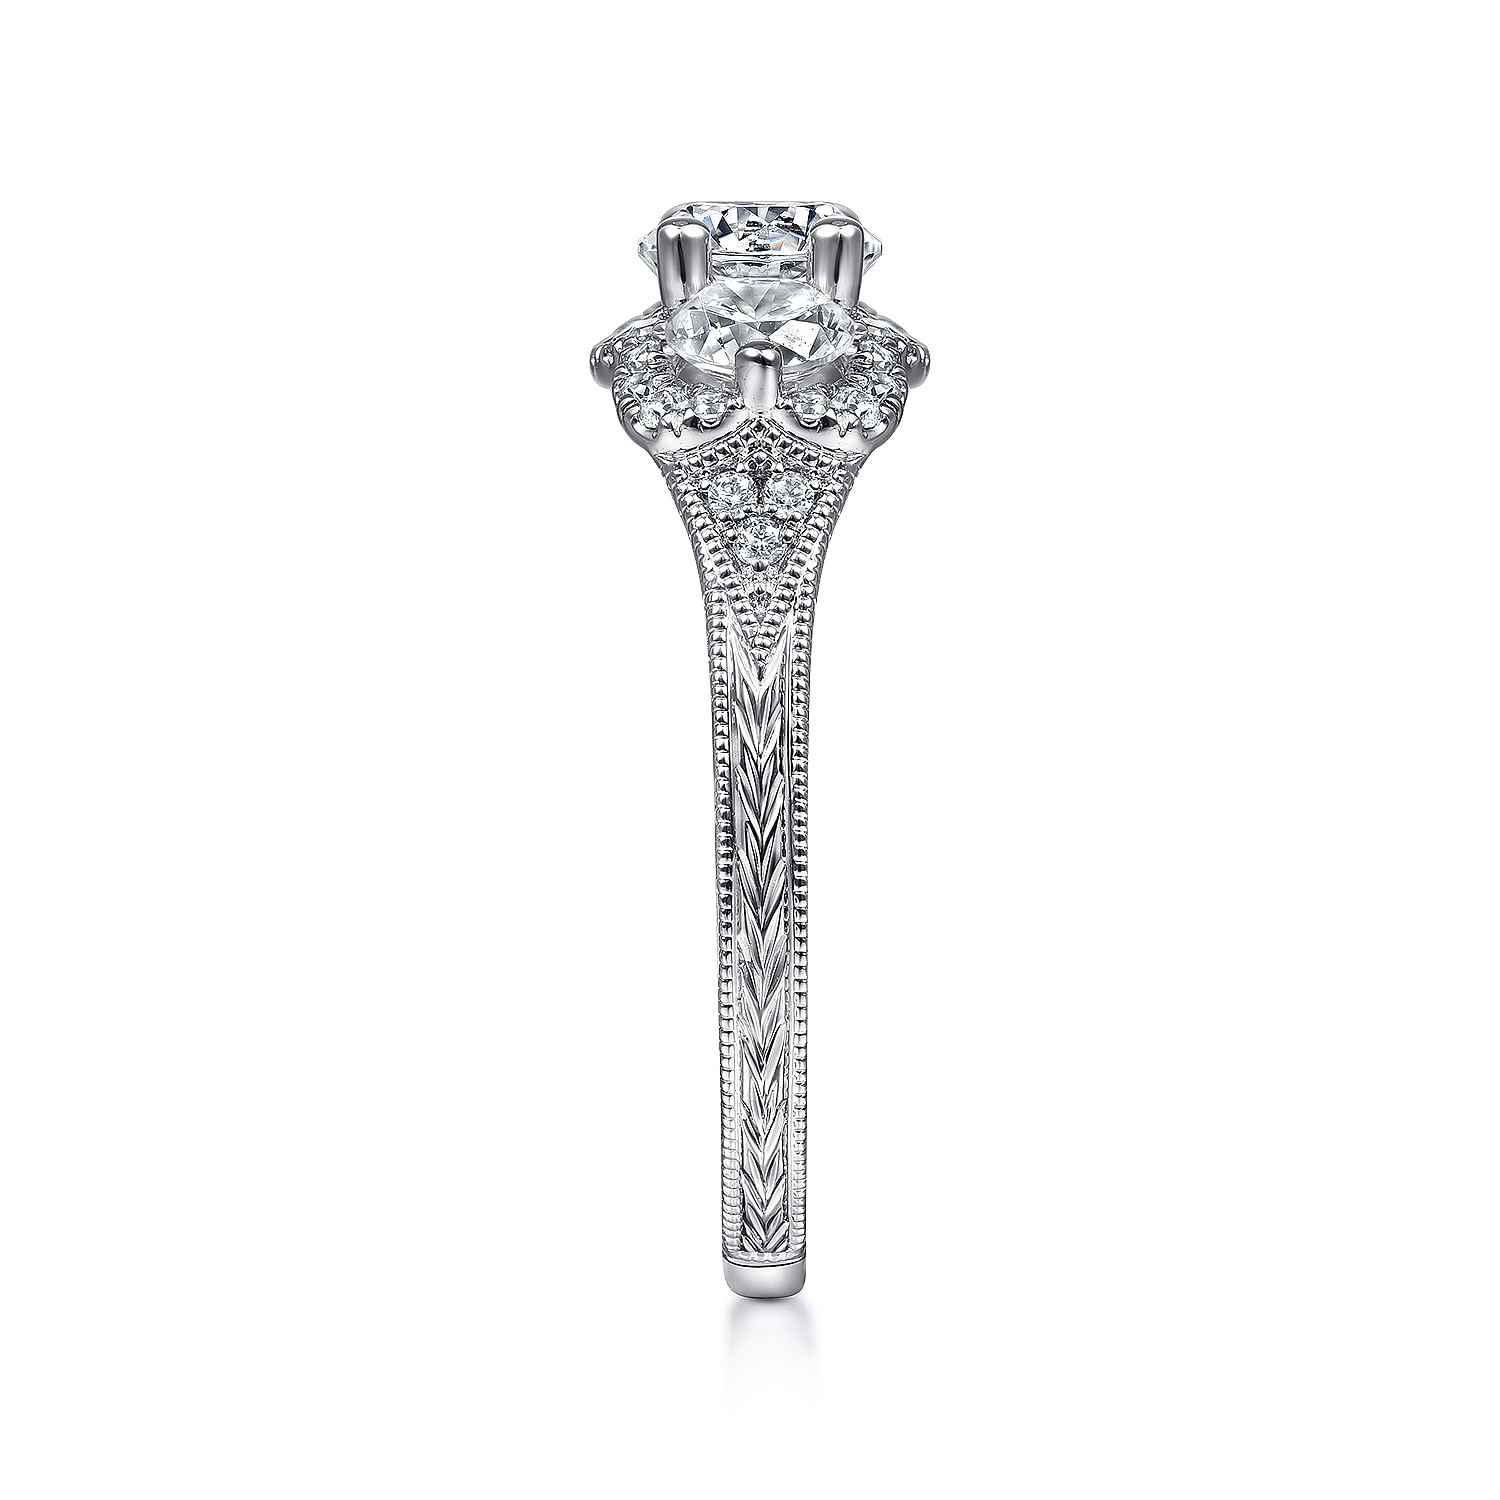 Vintage Inspired 14K White Gold Round Three Stone Halo Diamond Engagement Ring